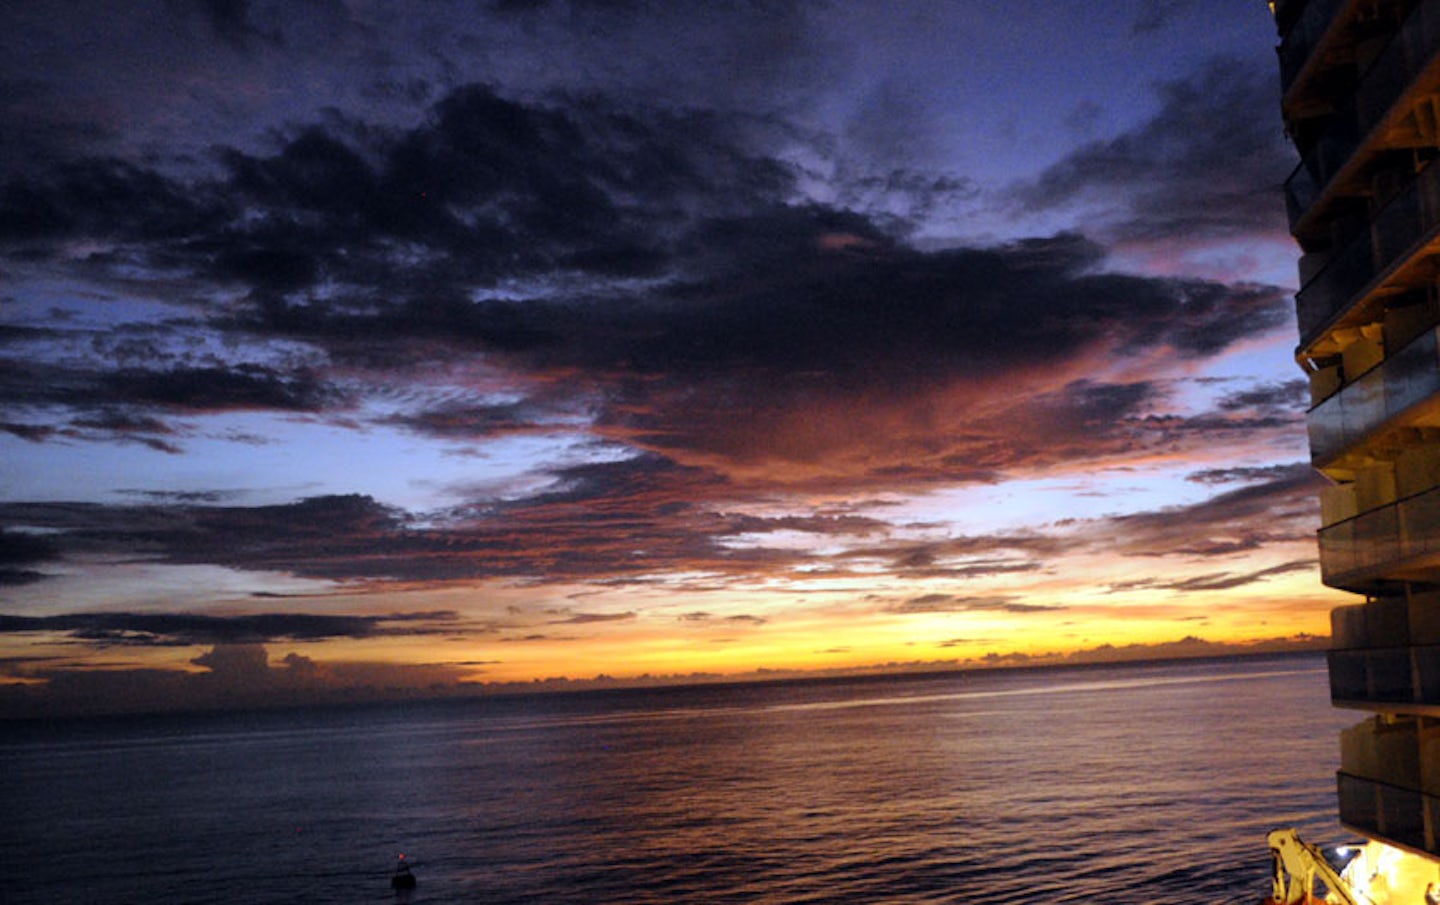 Caribbean sunset like this every night